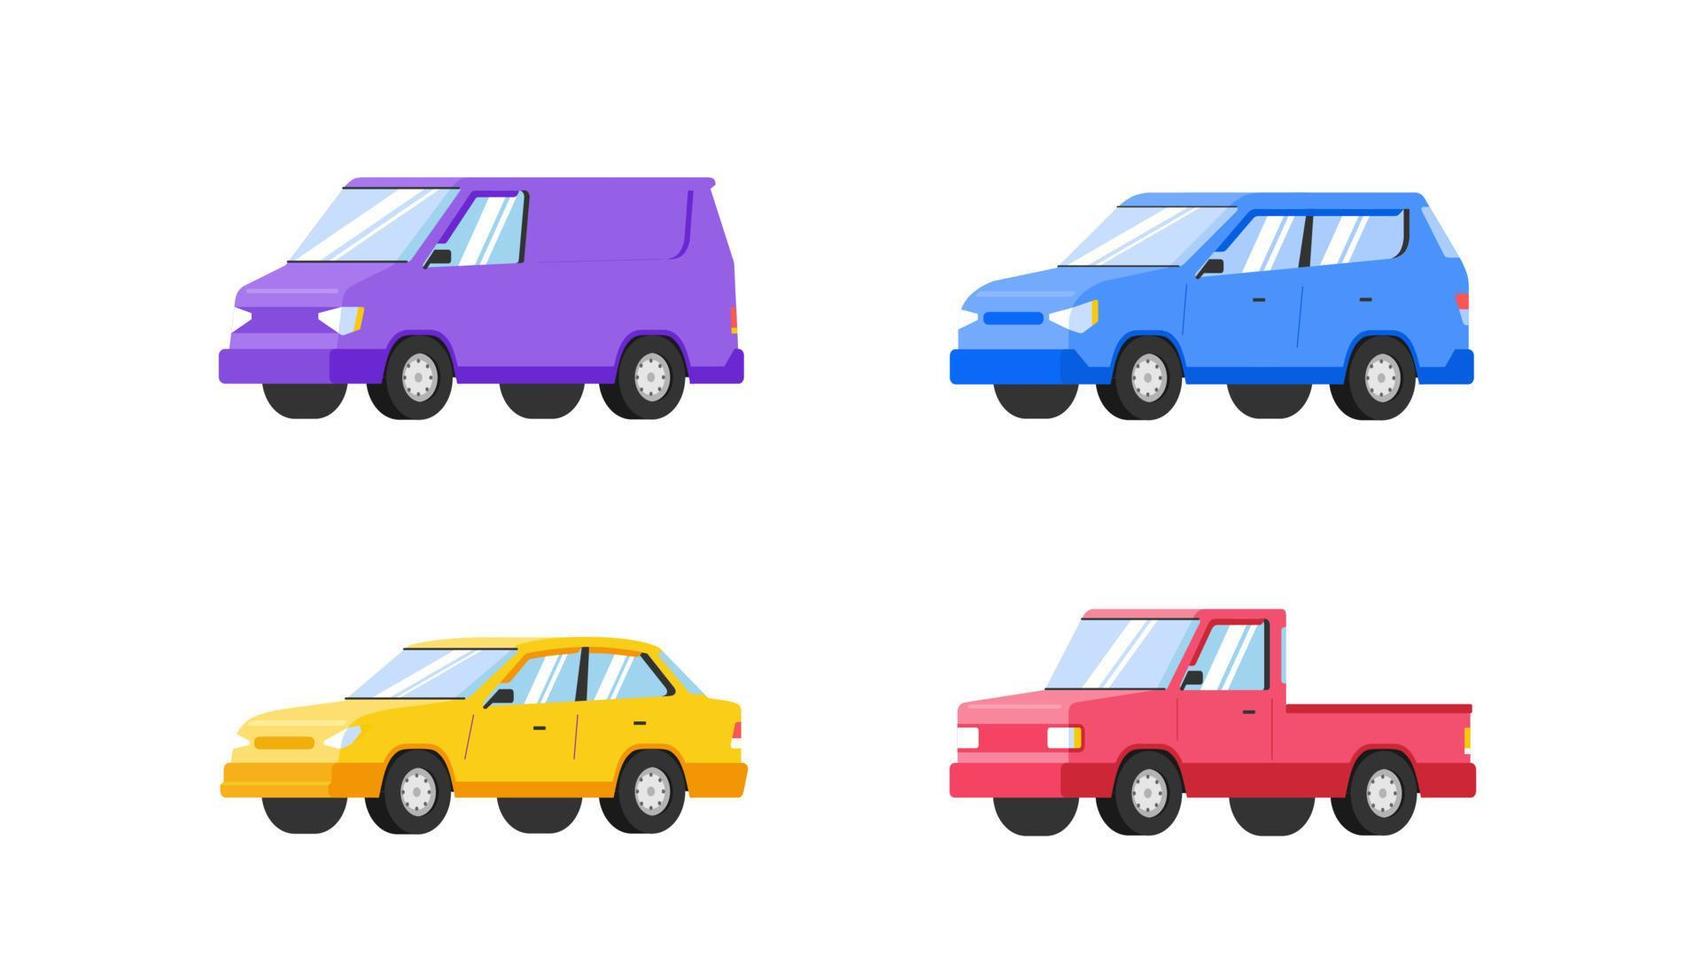 colección de coches. ilustración vectorial en estilo plano. concepto de transporte aislado sobre fondo blanco. conjunto de diferentes modelos de coches vector